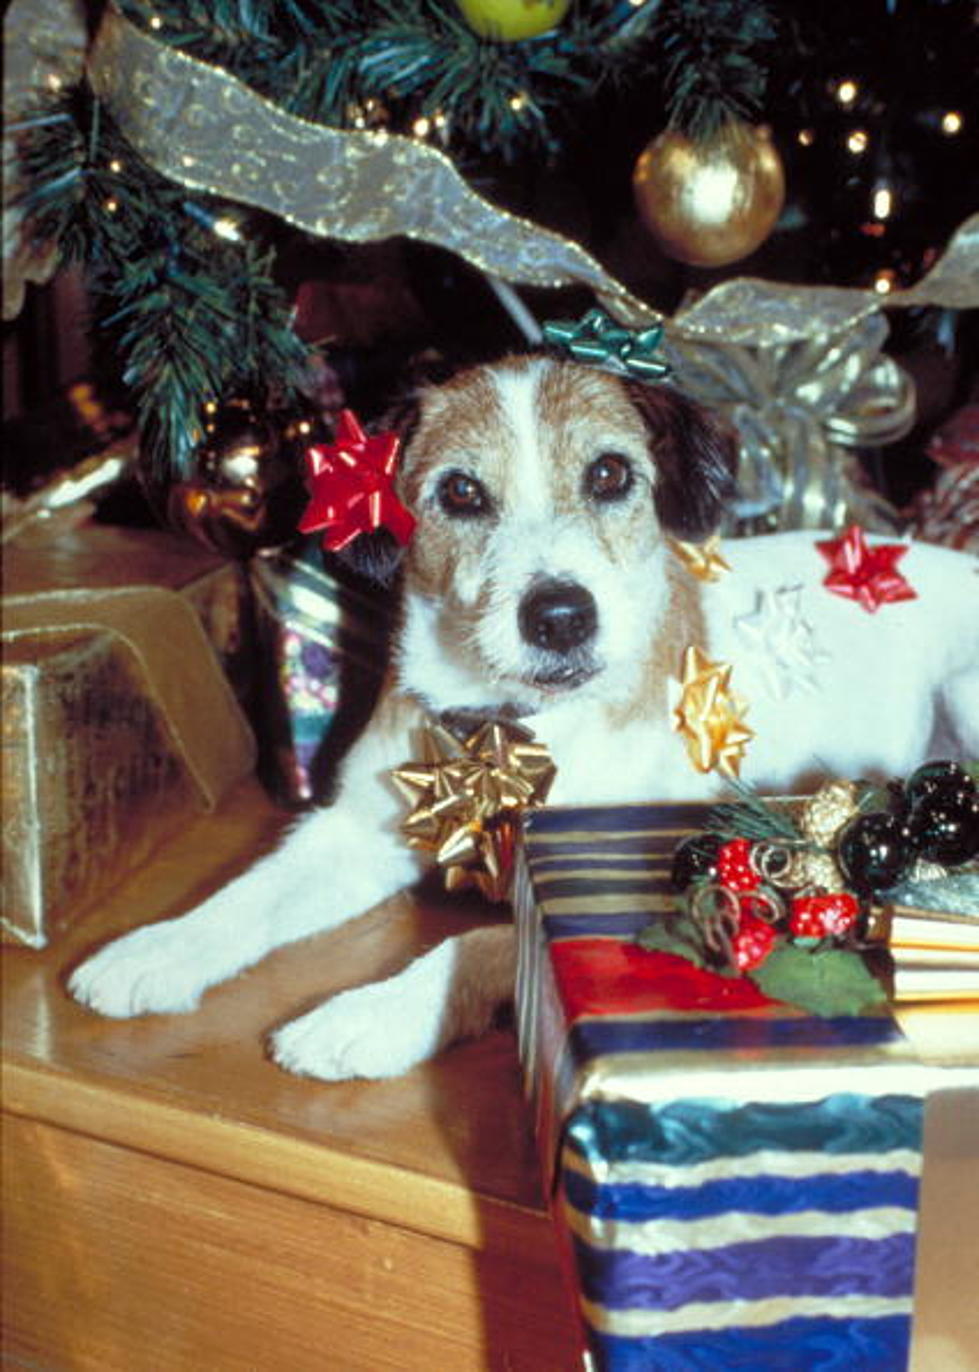 Do You Buy Your Pets Christmas Gifts? [Poll]